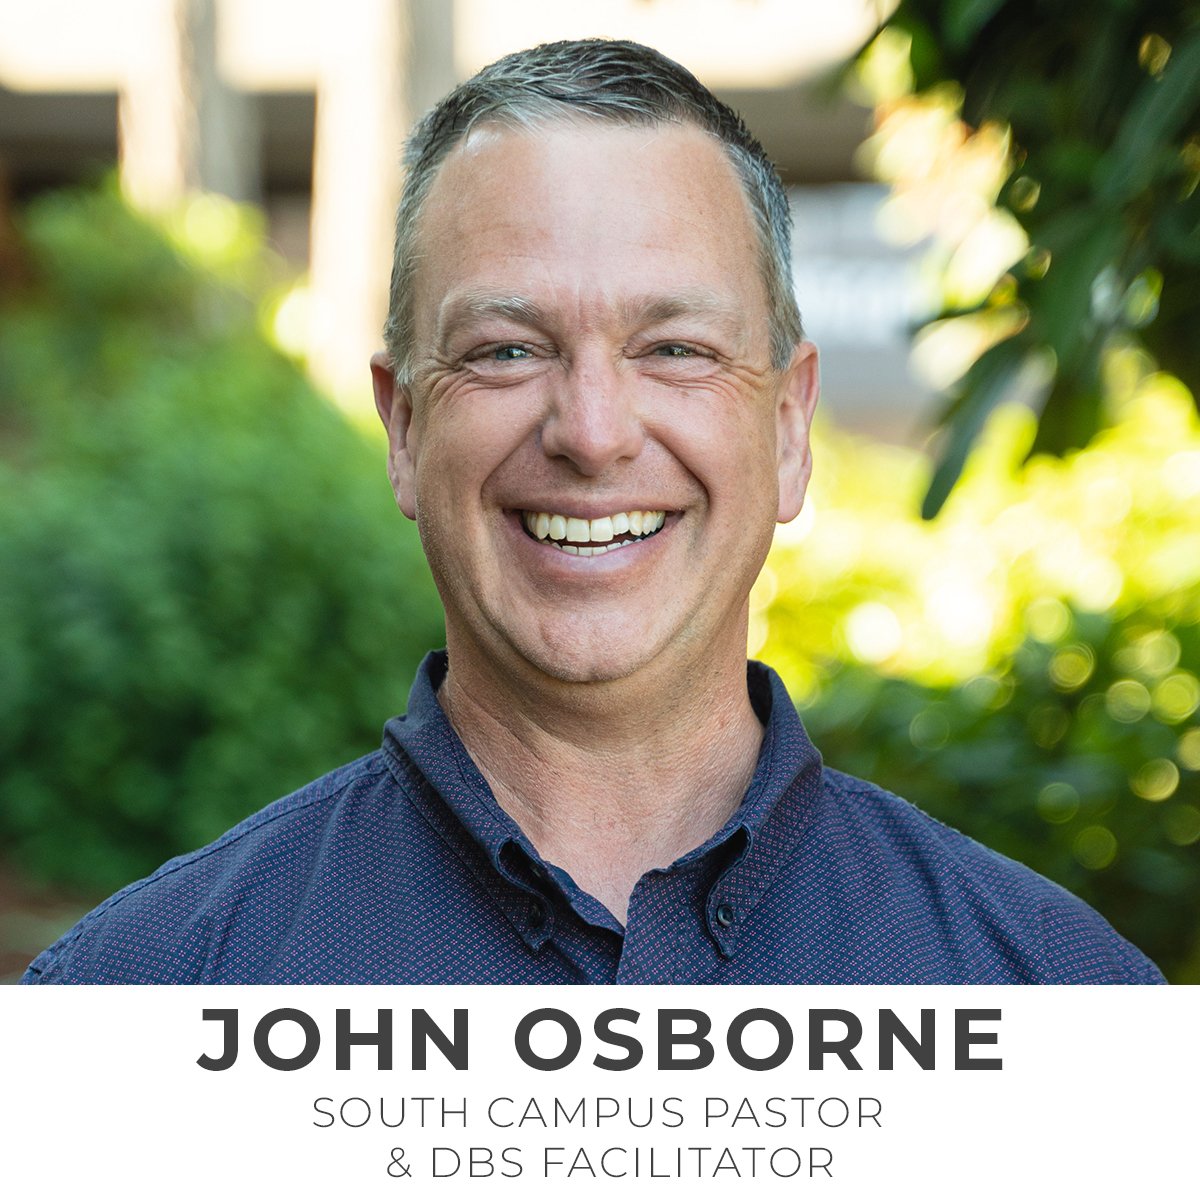 John Osborne, South Campus Pastor and DBS Facilitator